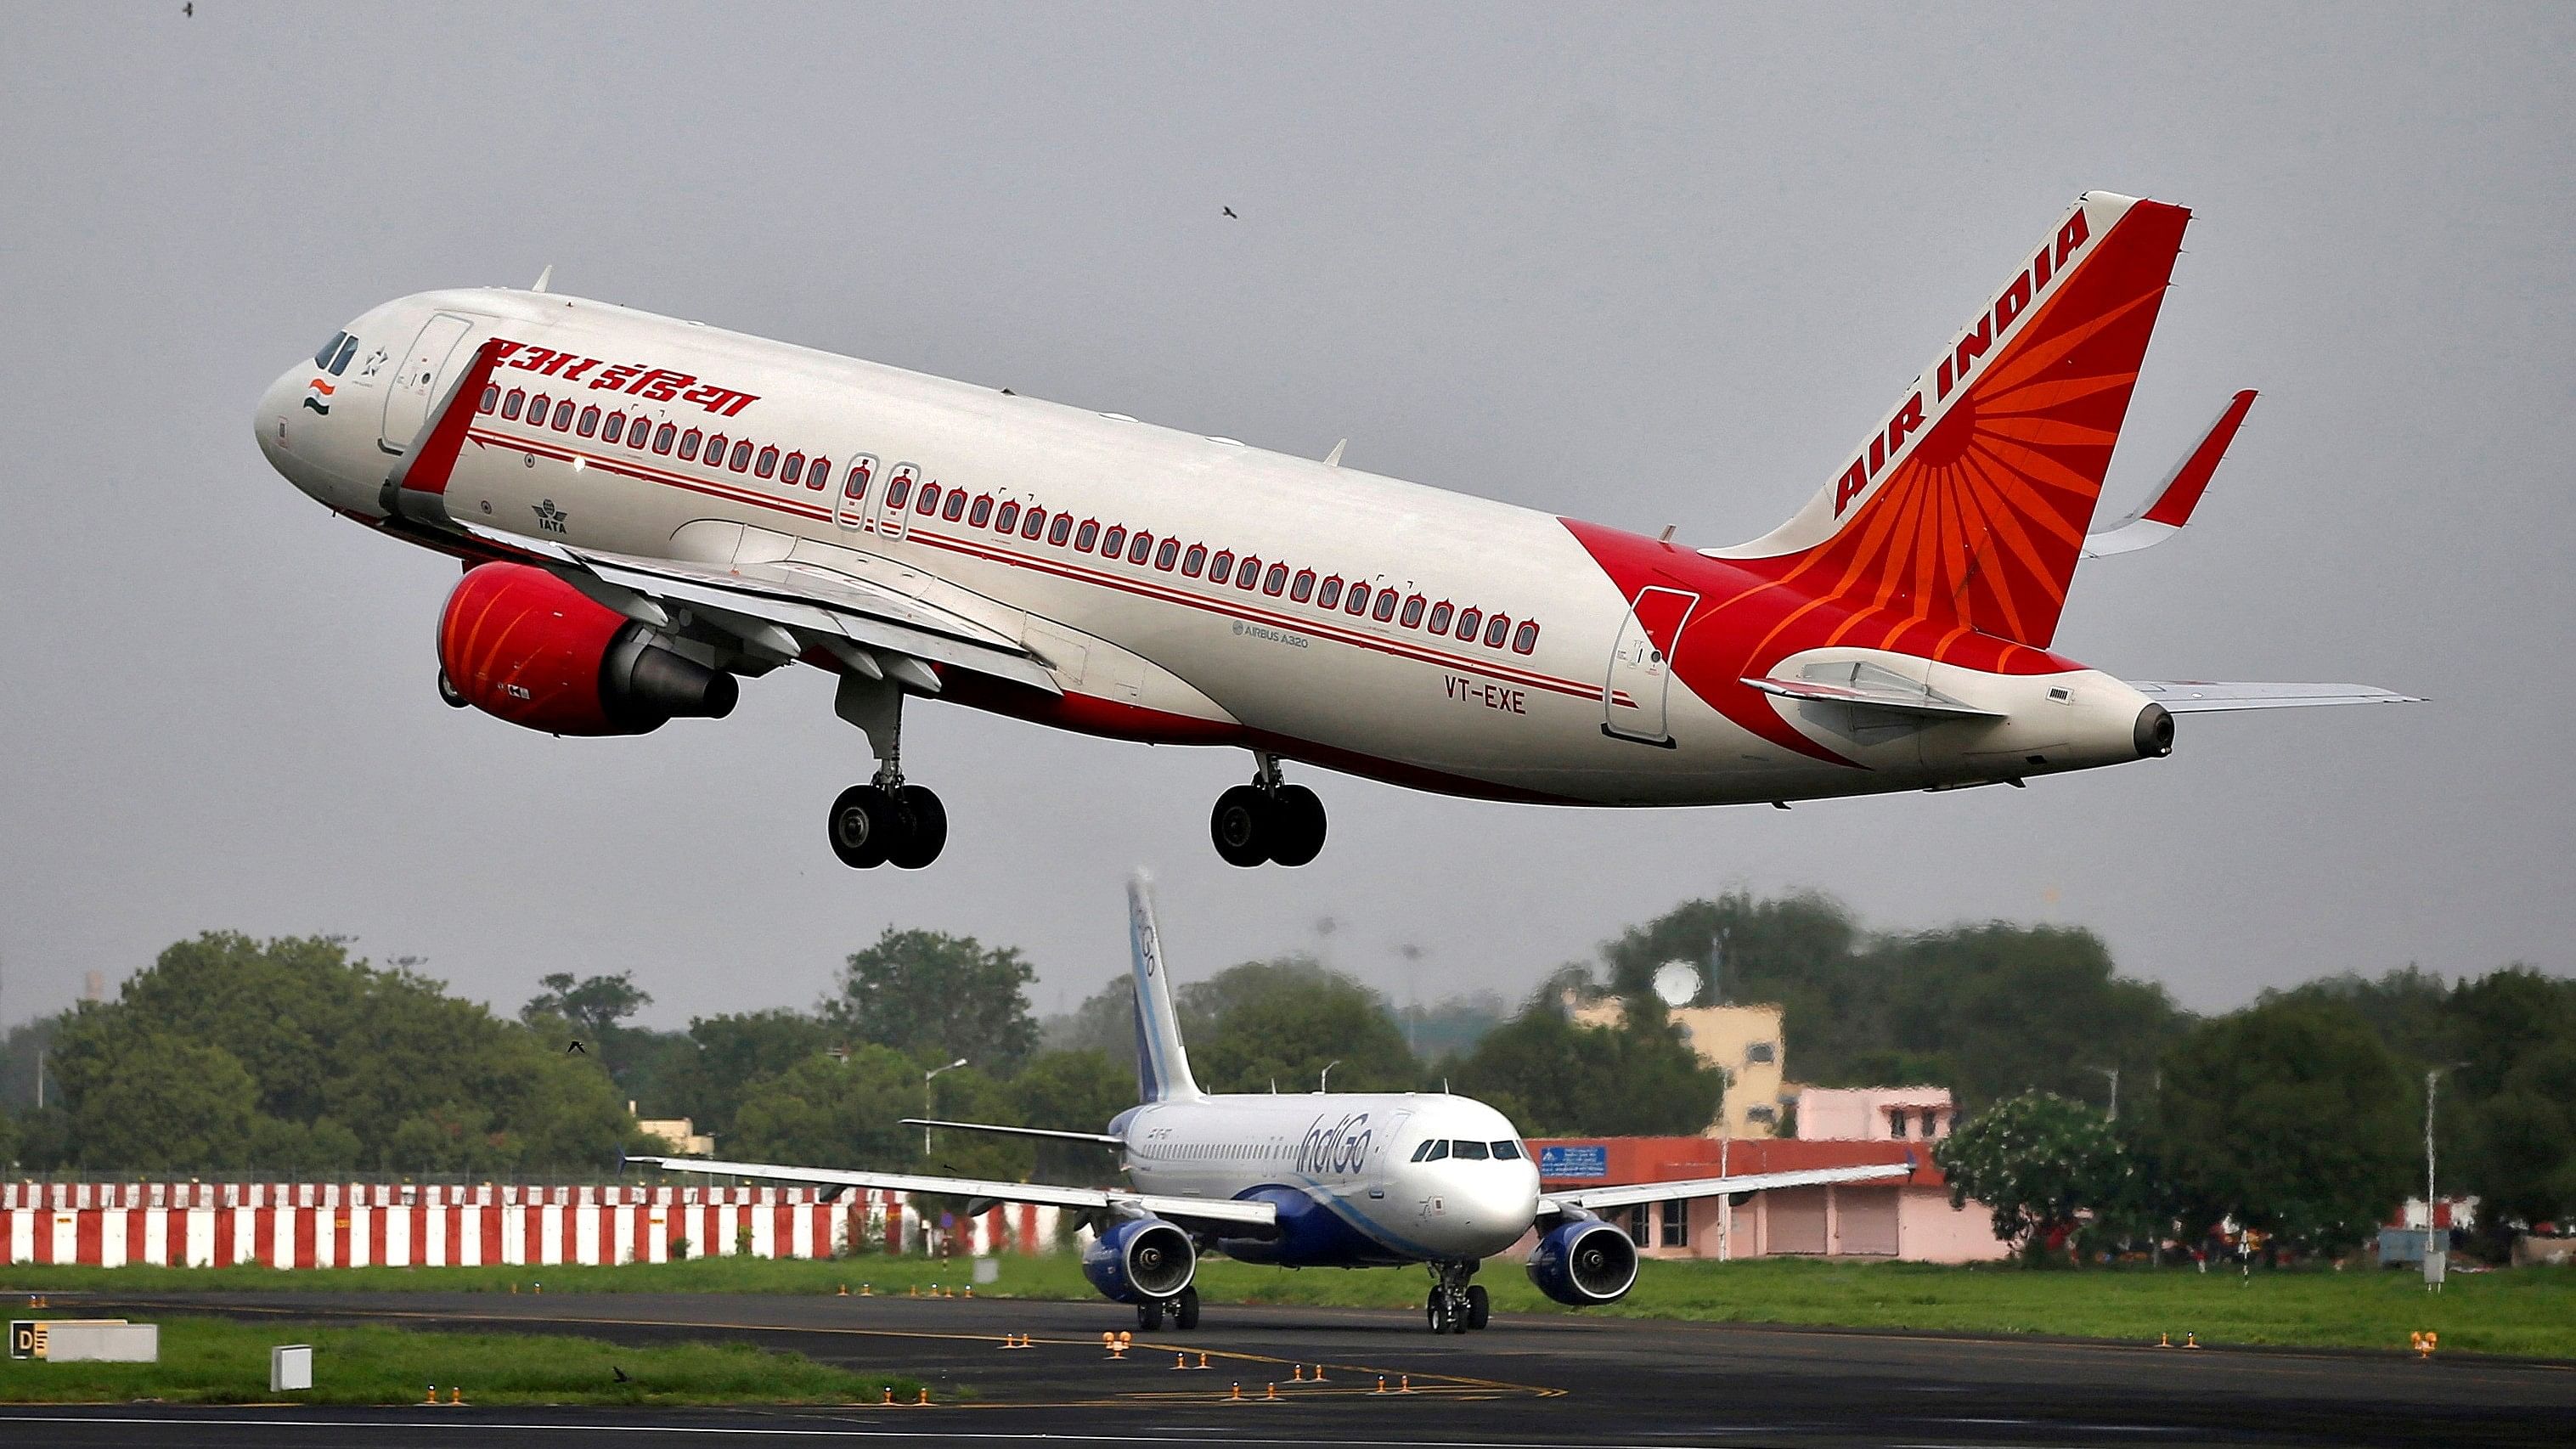 <div class="paragraphs"><p>An Air India Airbus A320-200 aircraft takes off as an IndiGo Airlines aircraft waits for clearance at Sardar Vallabhbhai Patel International Airport in Ahmedabad.</p></div>